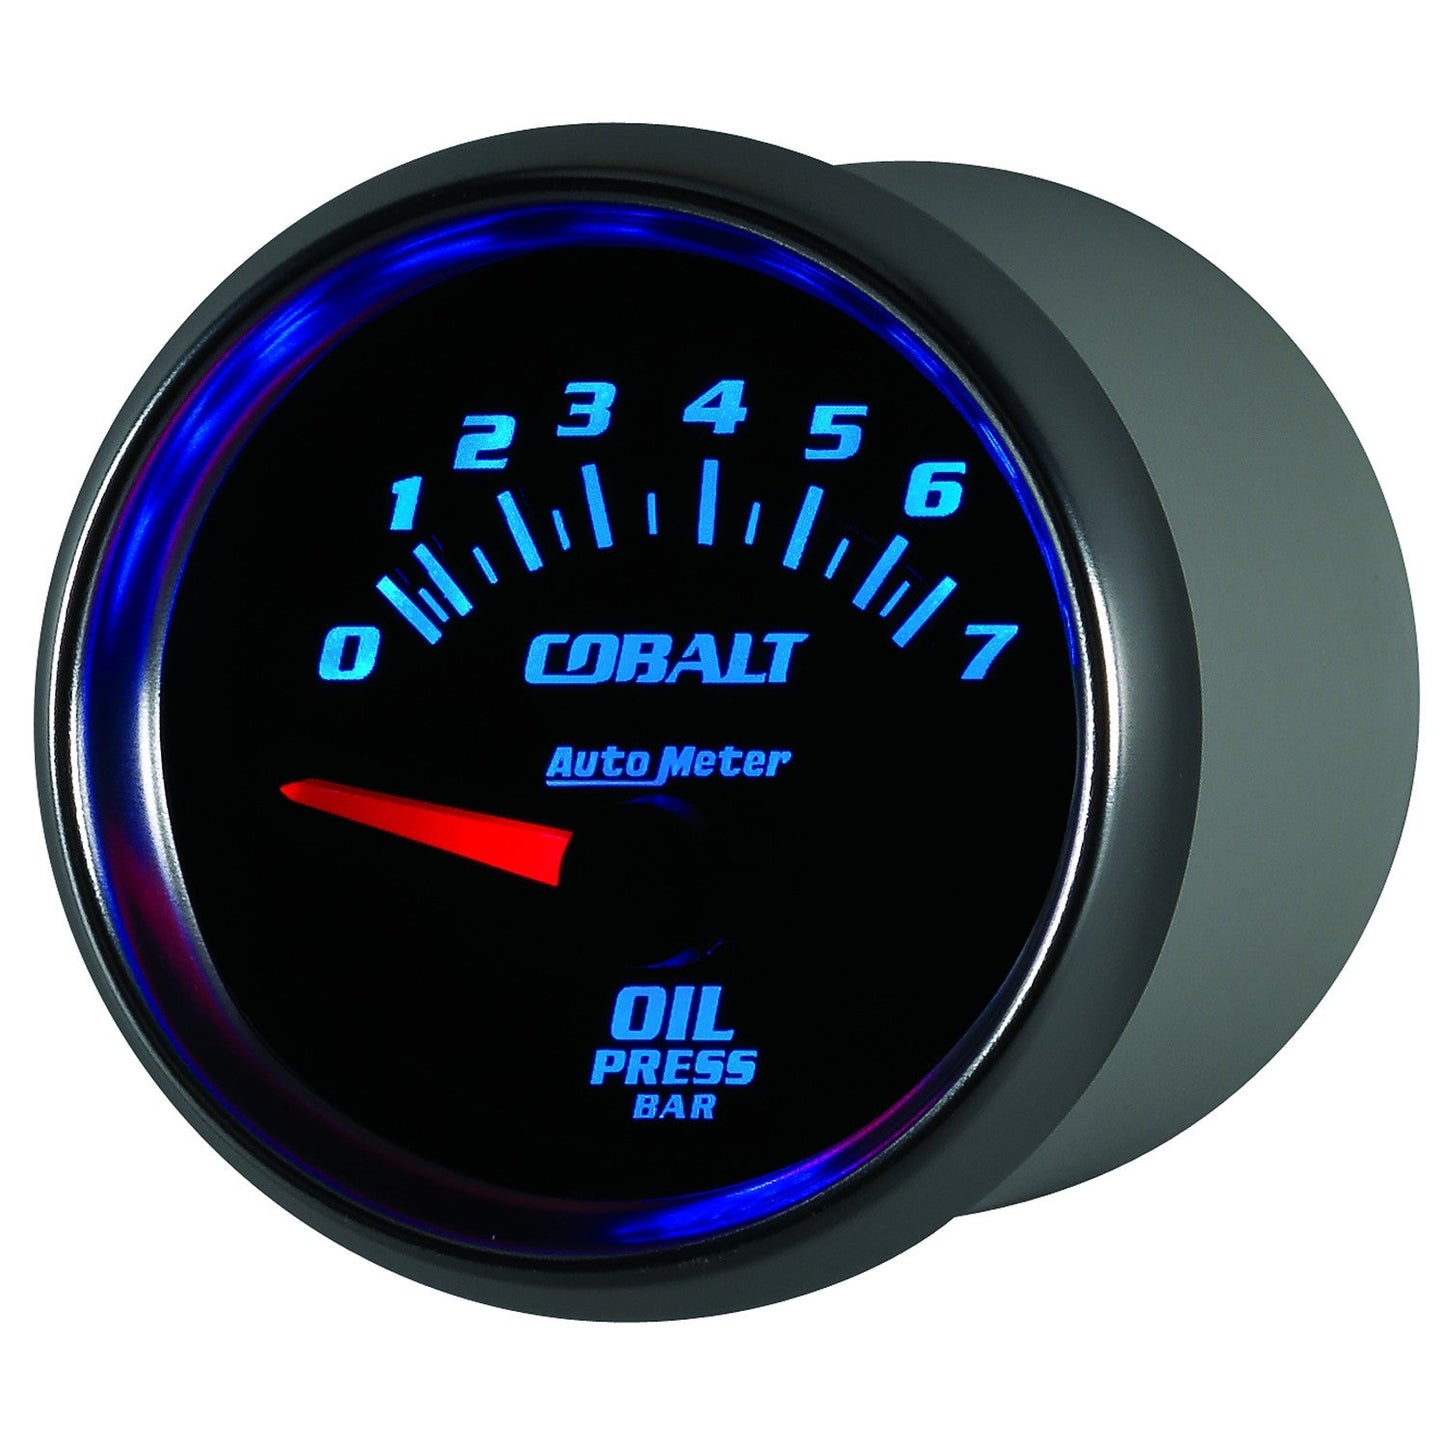 AutoMeter - 2-1/16" OIL PRESSURE, 0-7 BAR, AIR-CORE, COBALT (6127-M)